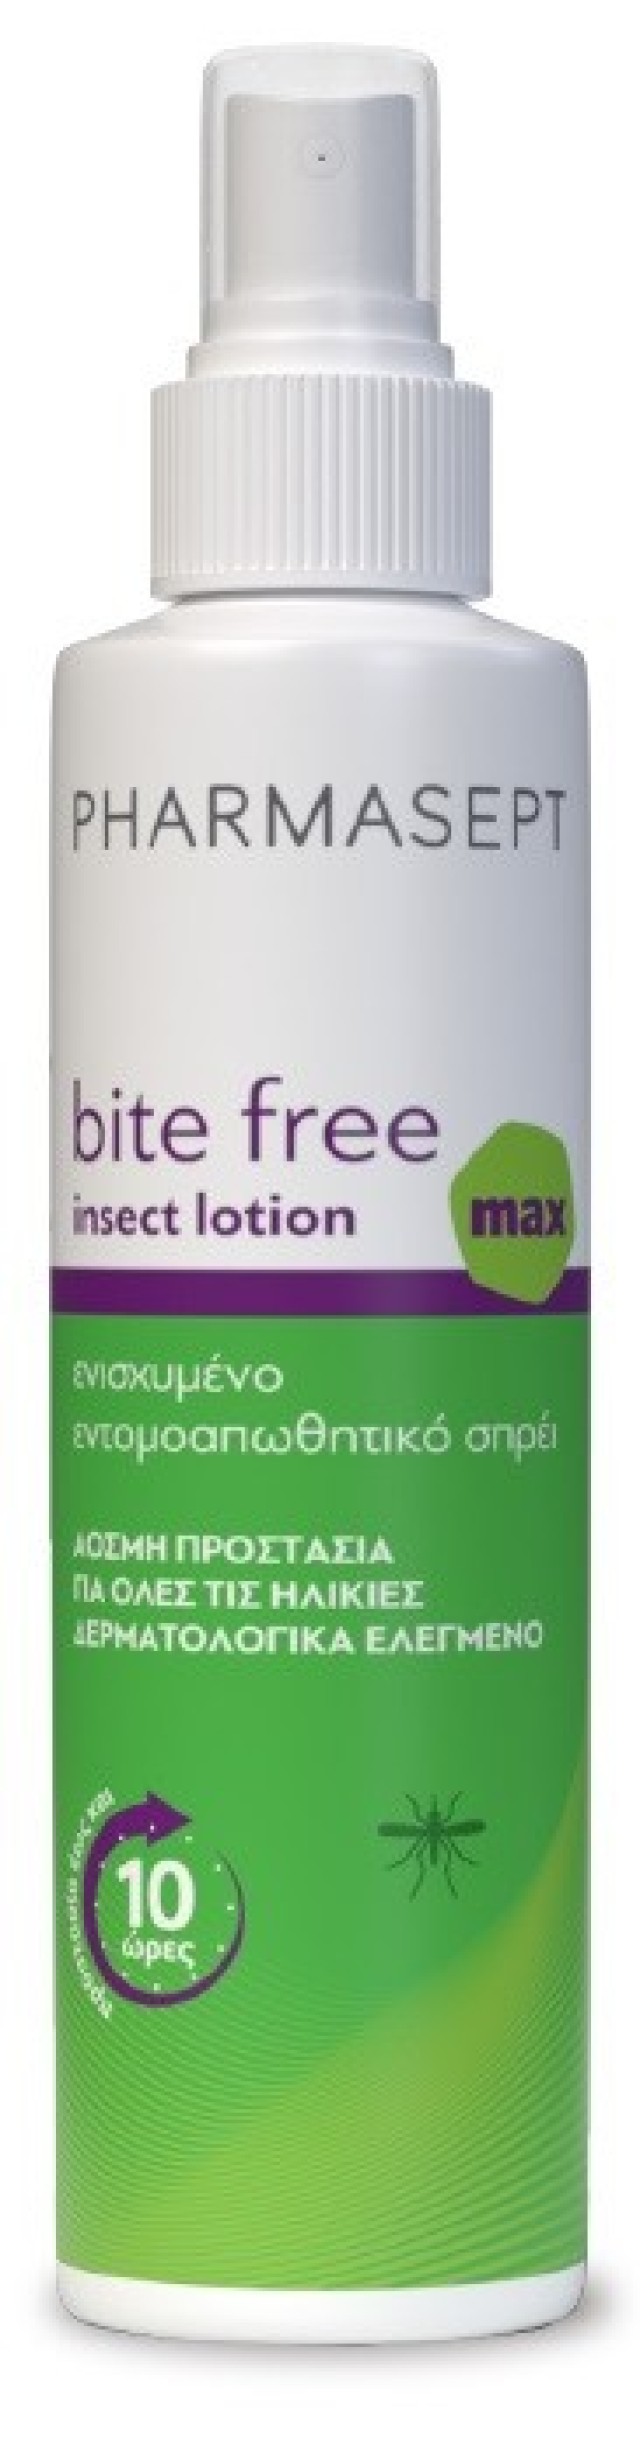 Pharmasept Bite Free Insect Max Lotion Ενισχυμένο Εντομοαπωθητικό Σπρέι 100ml